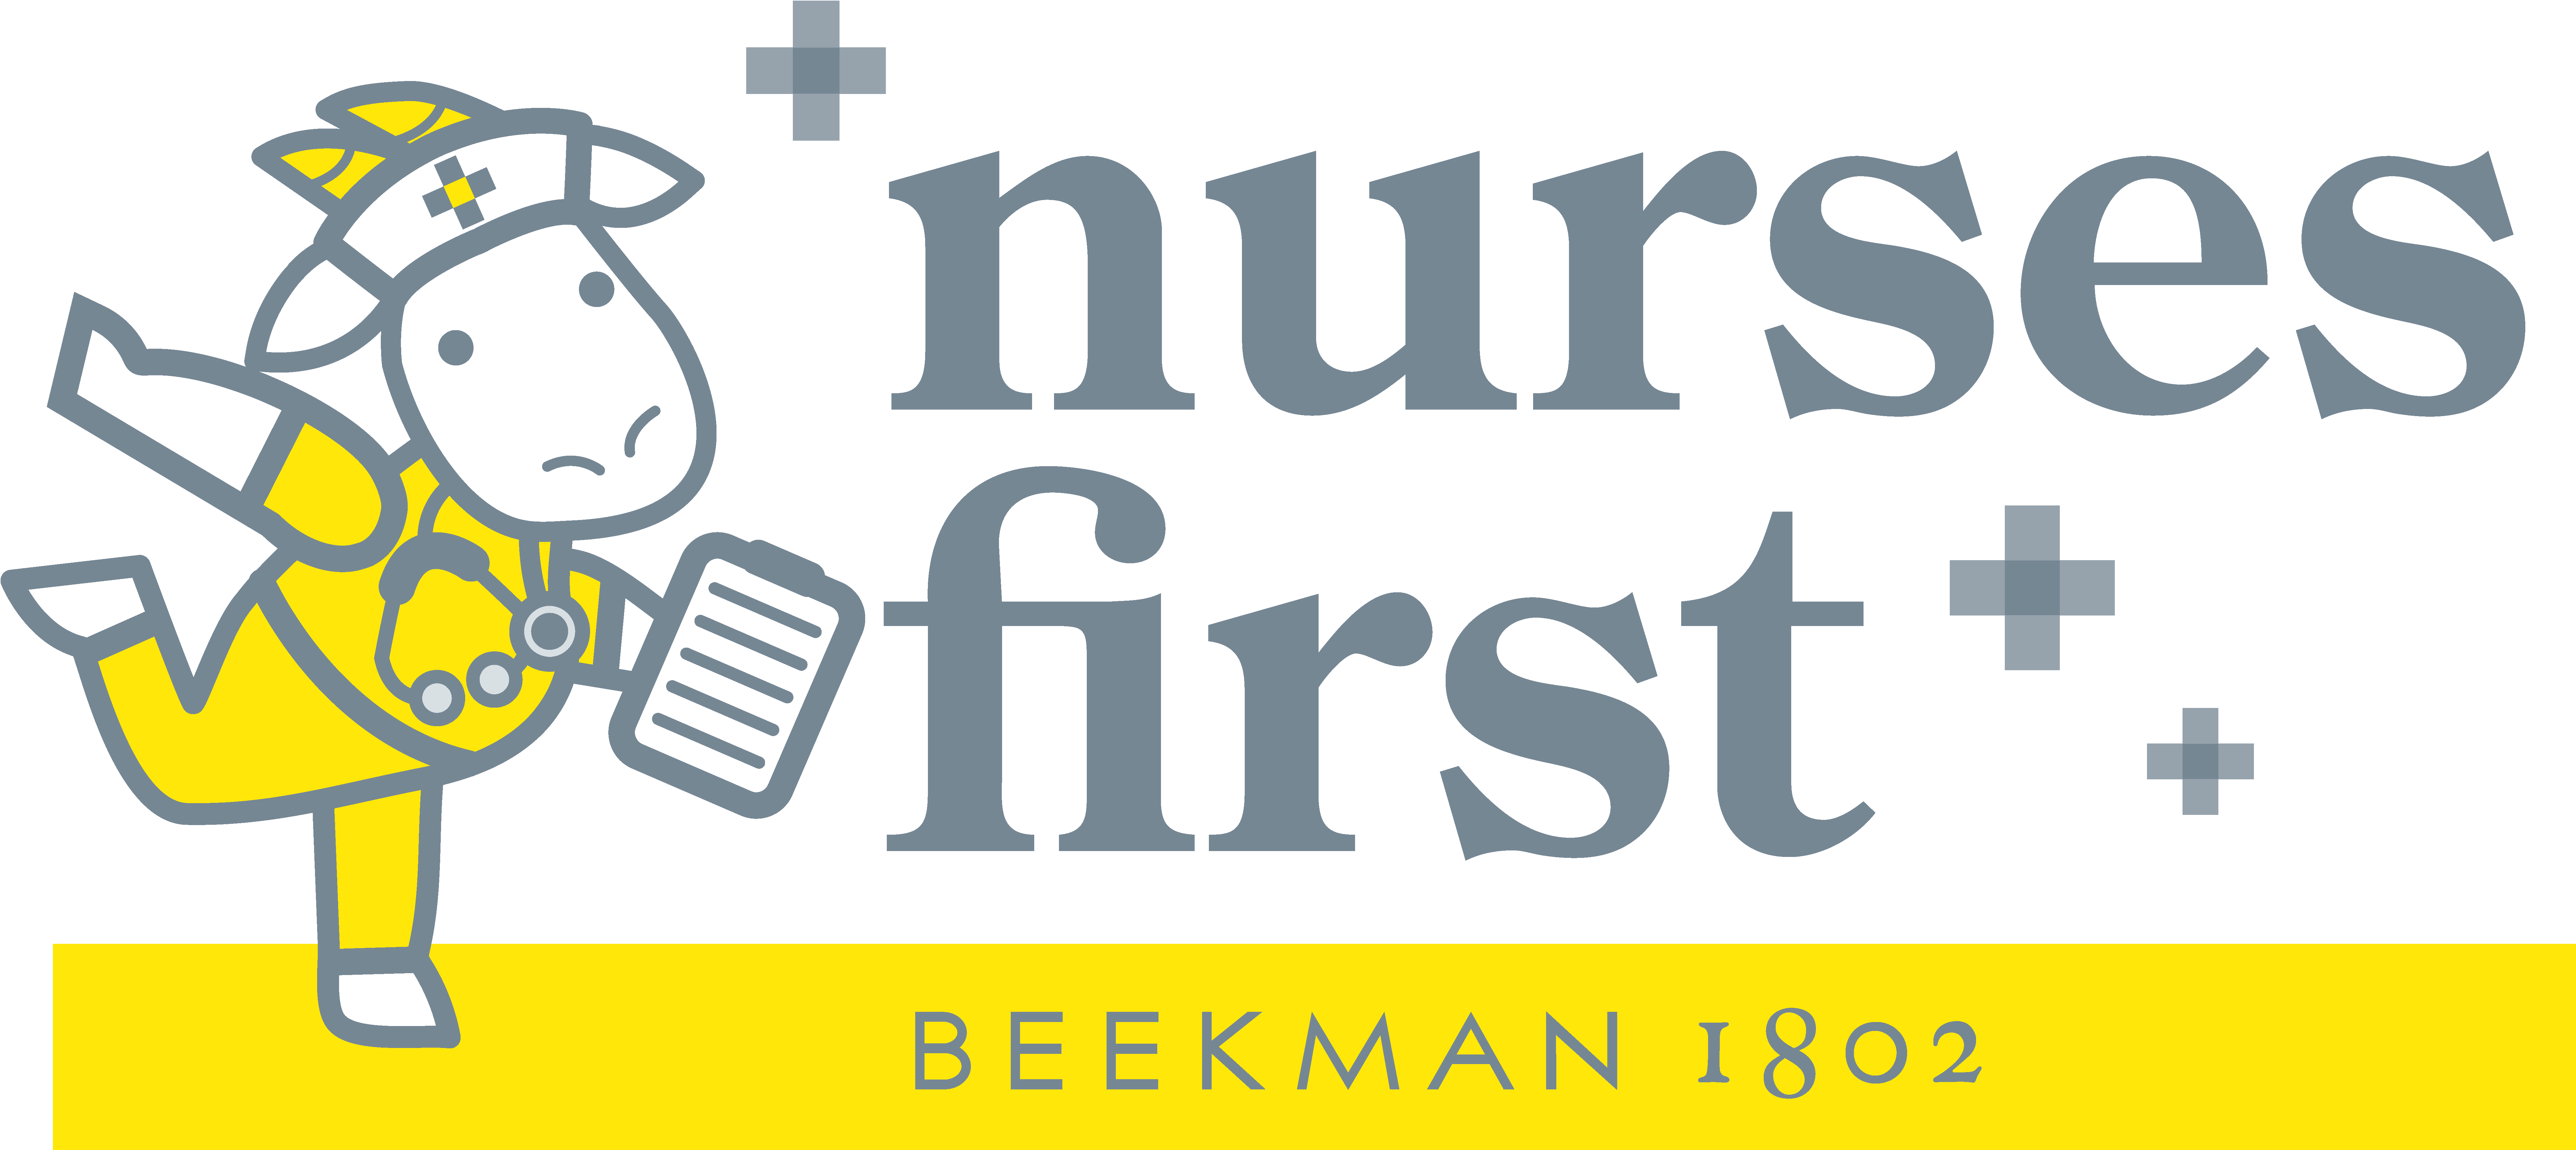 Beekman1802_NursesFirst_Logo-01.png